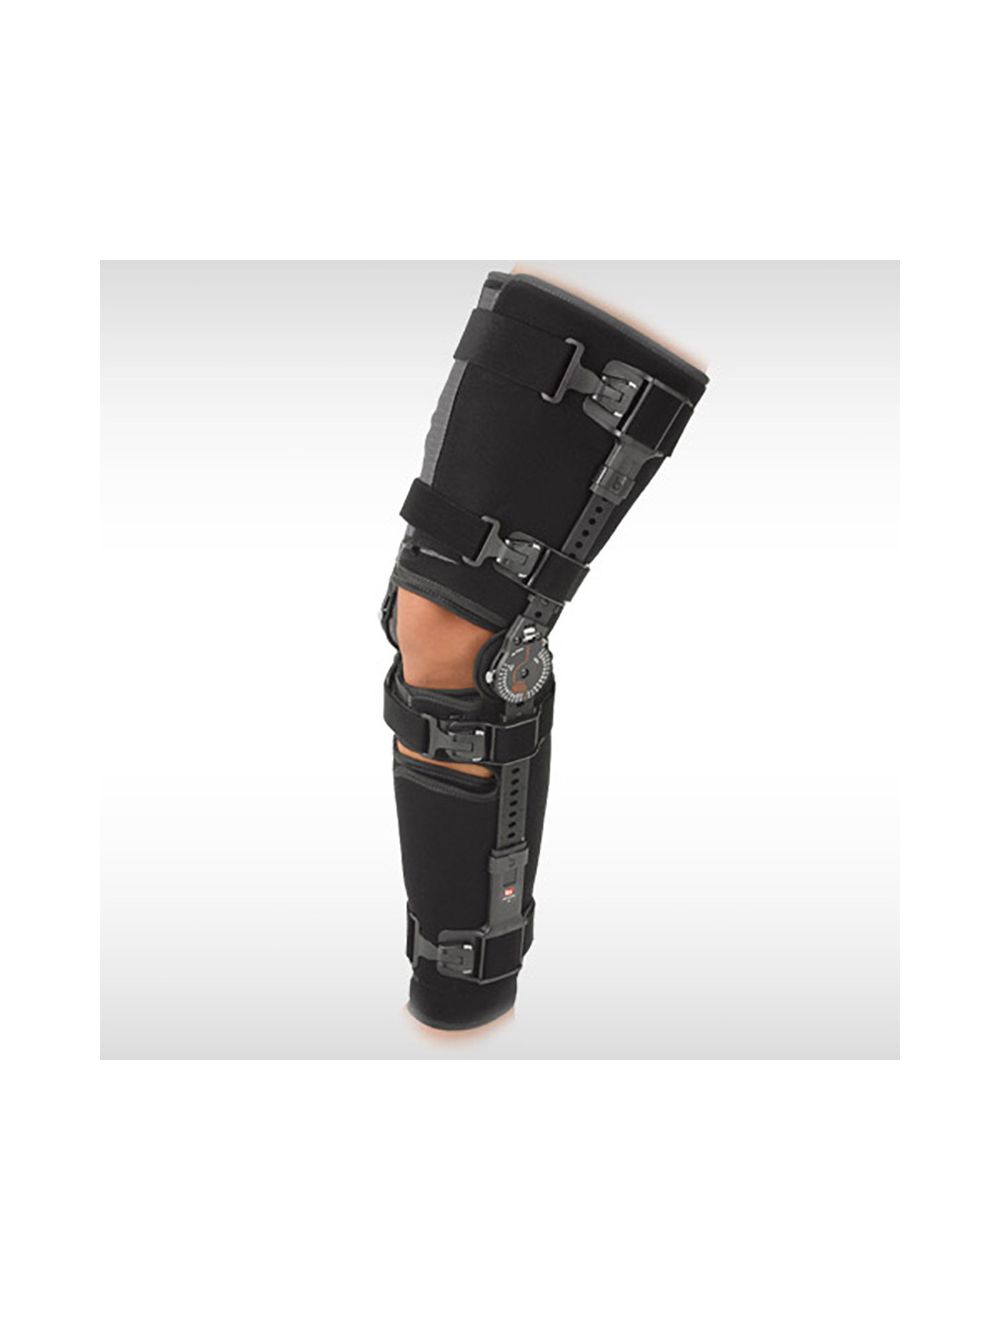 California Medical Supply Company Breg G3 Post-Op Knee Brace AAA